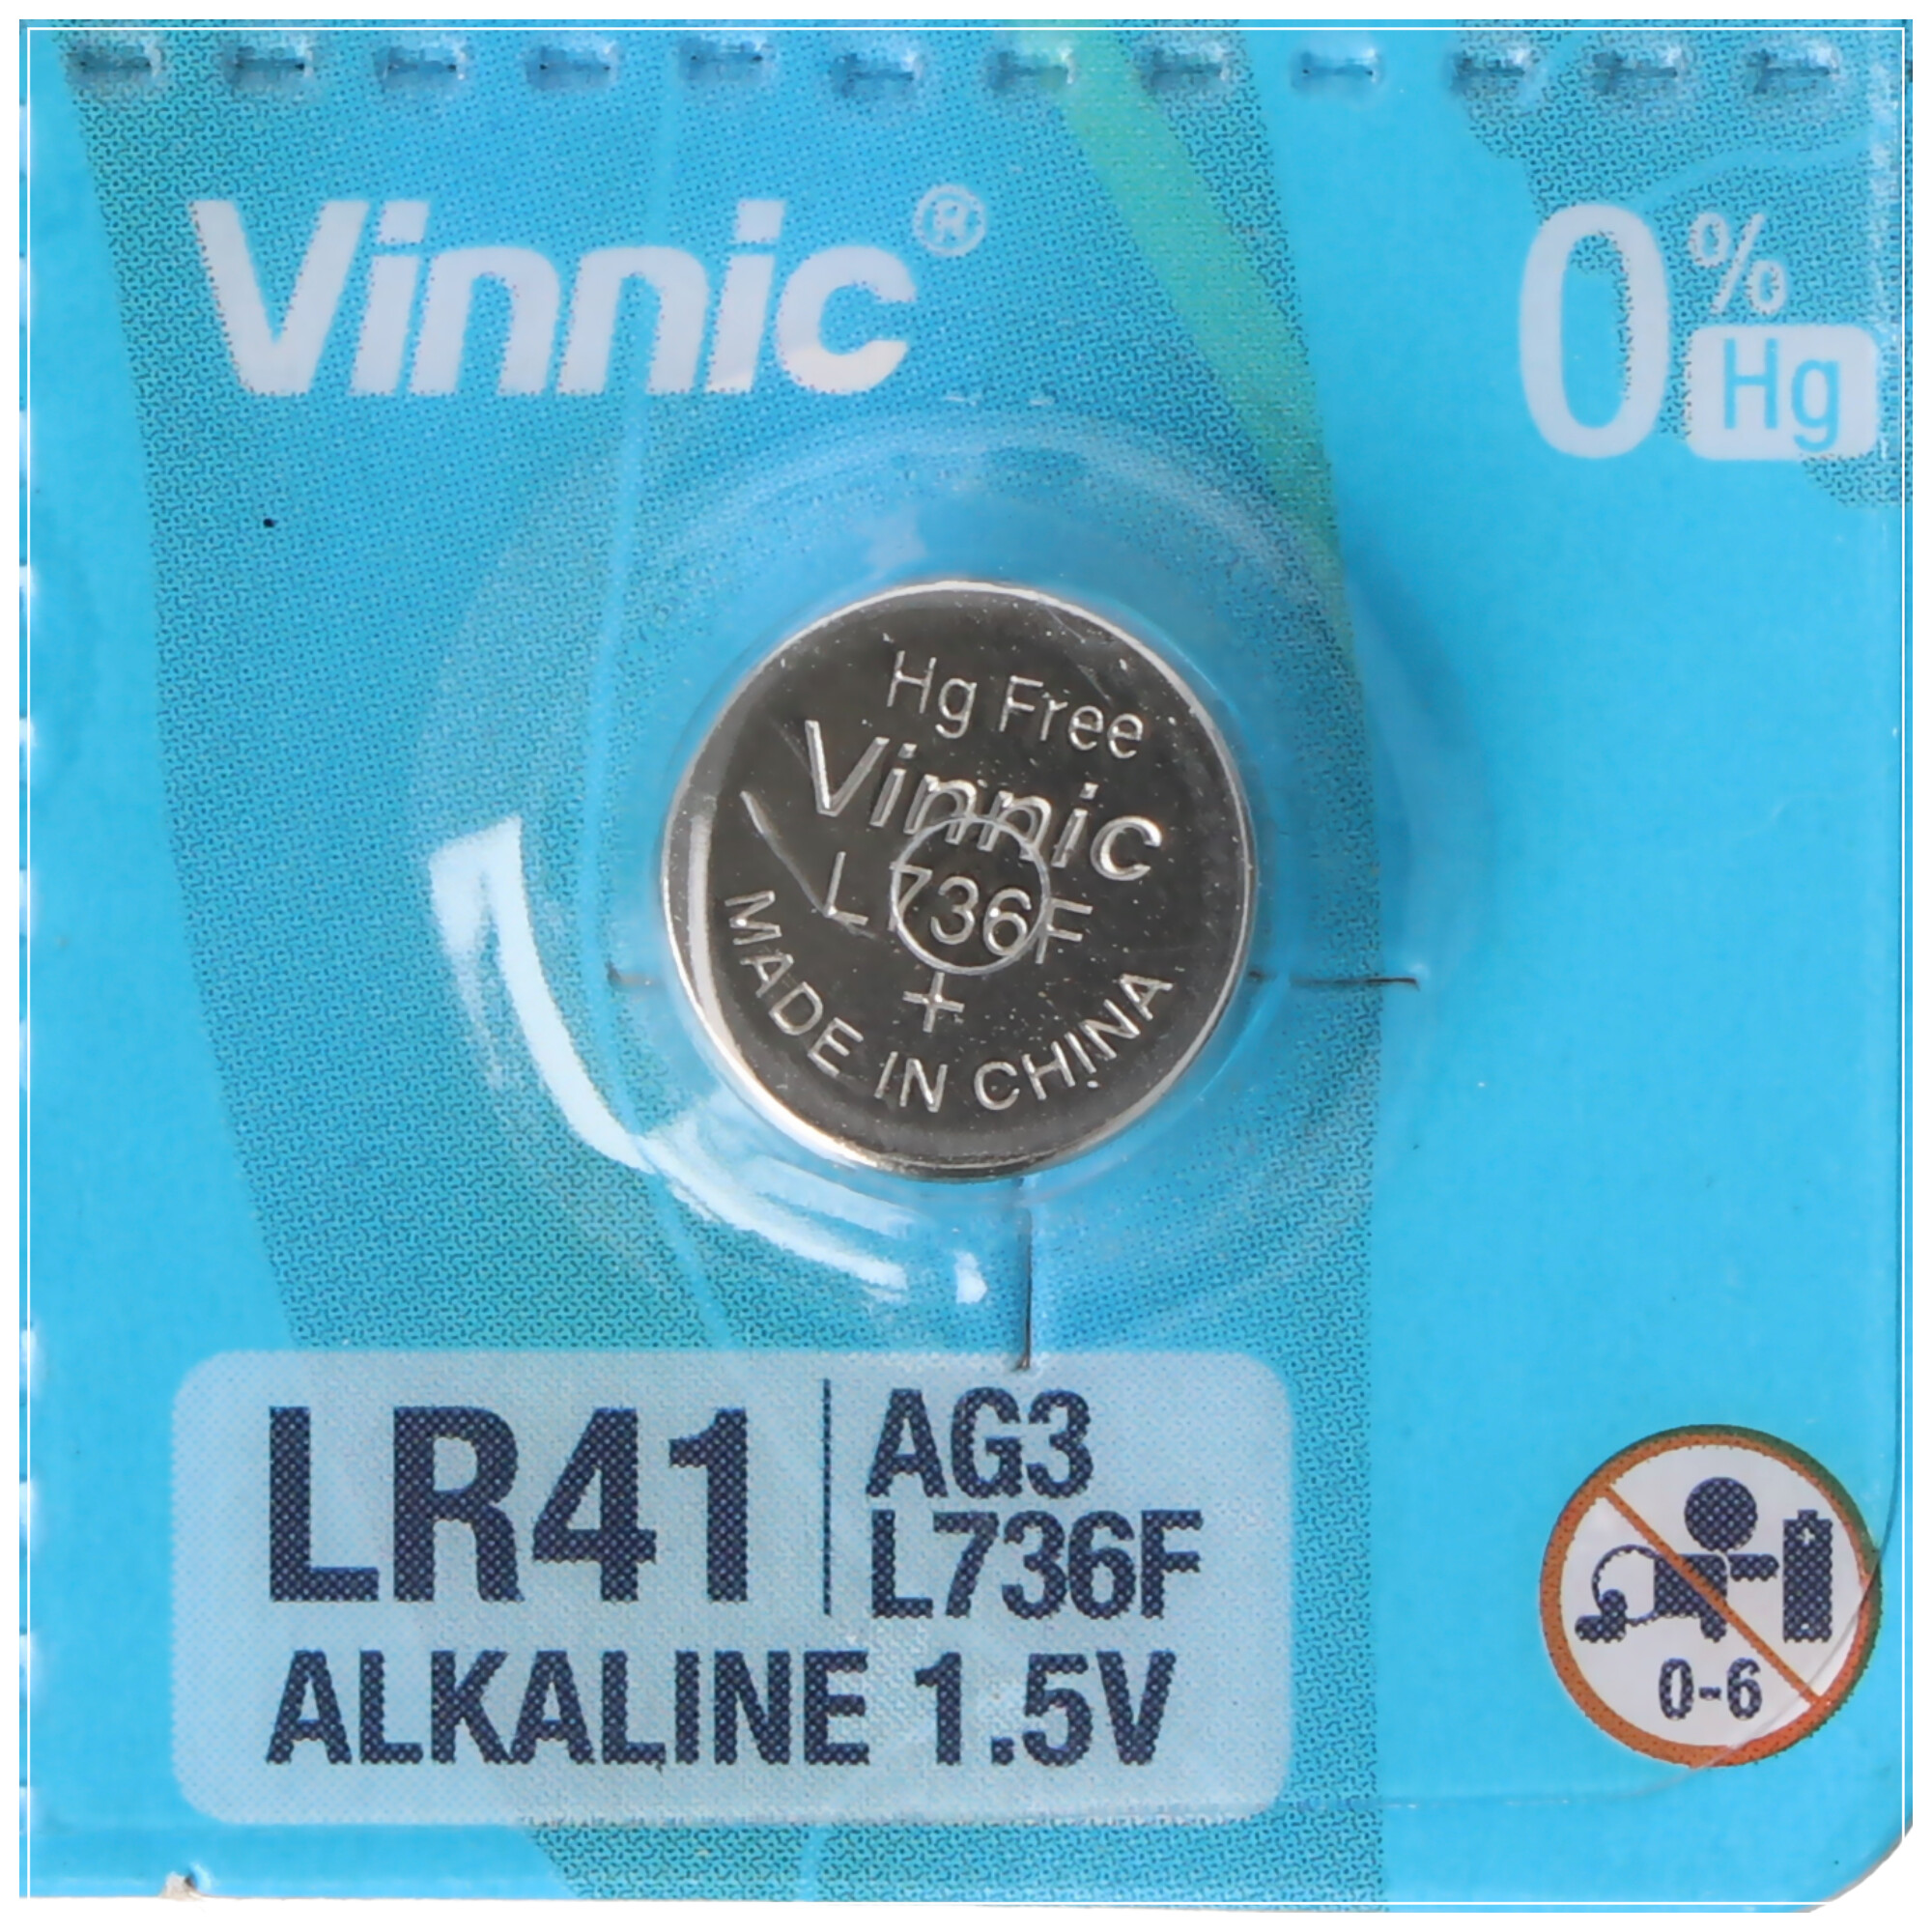 10 Stück Alkaline Batterie AG3, LR41 Alkaline Batterie L736F, AG3, L736 F, G3, G3A, SR41